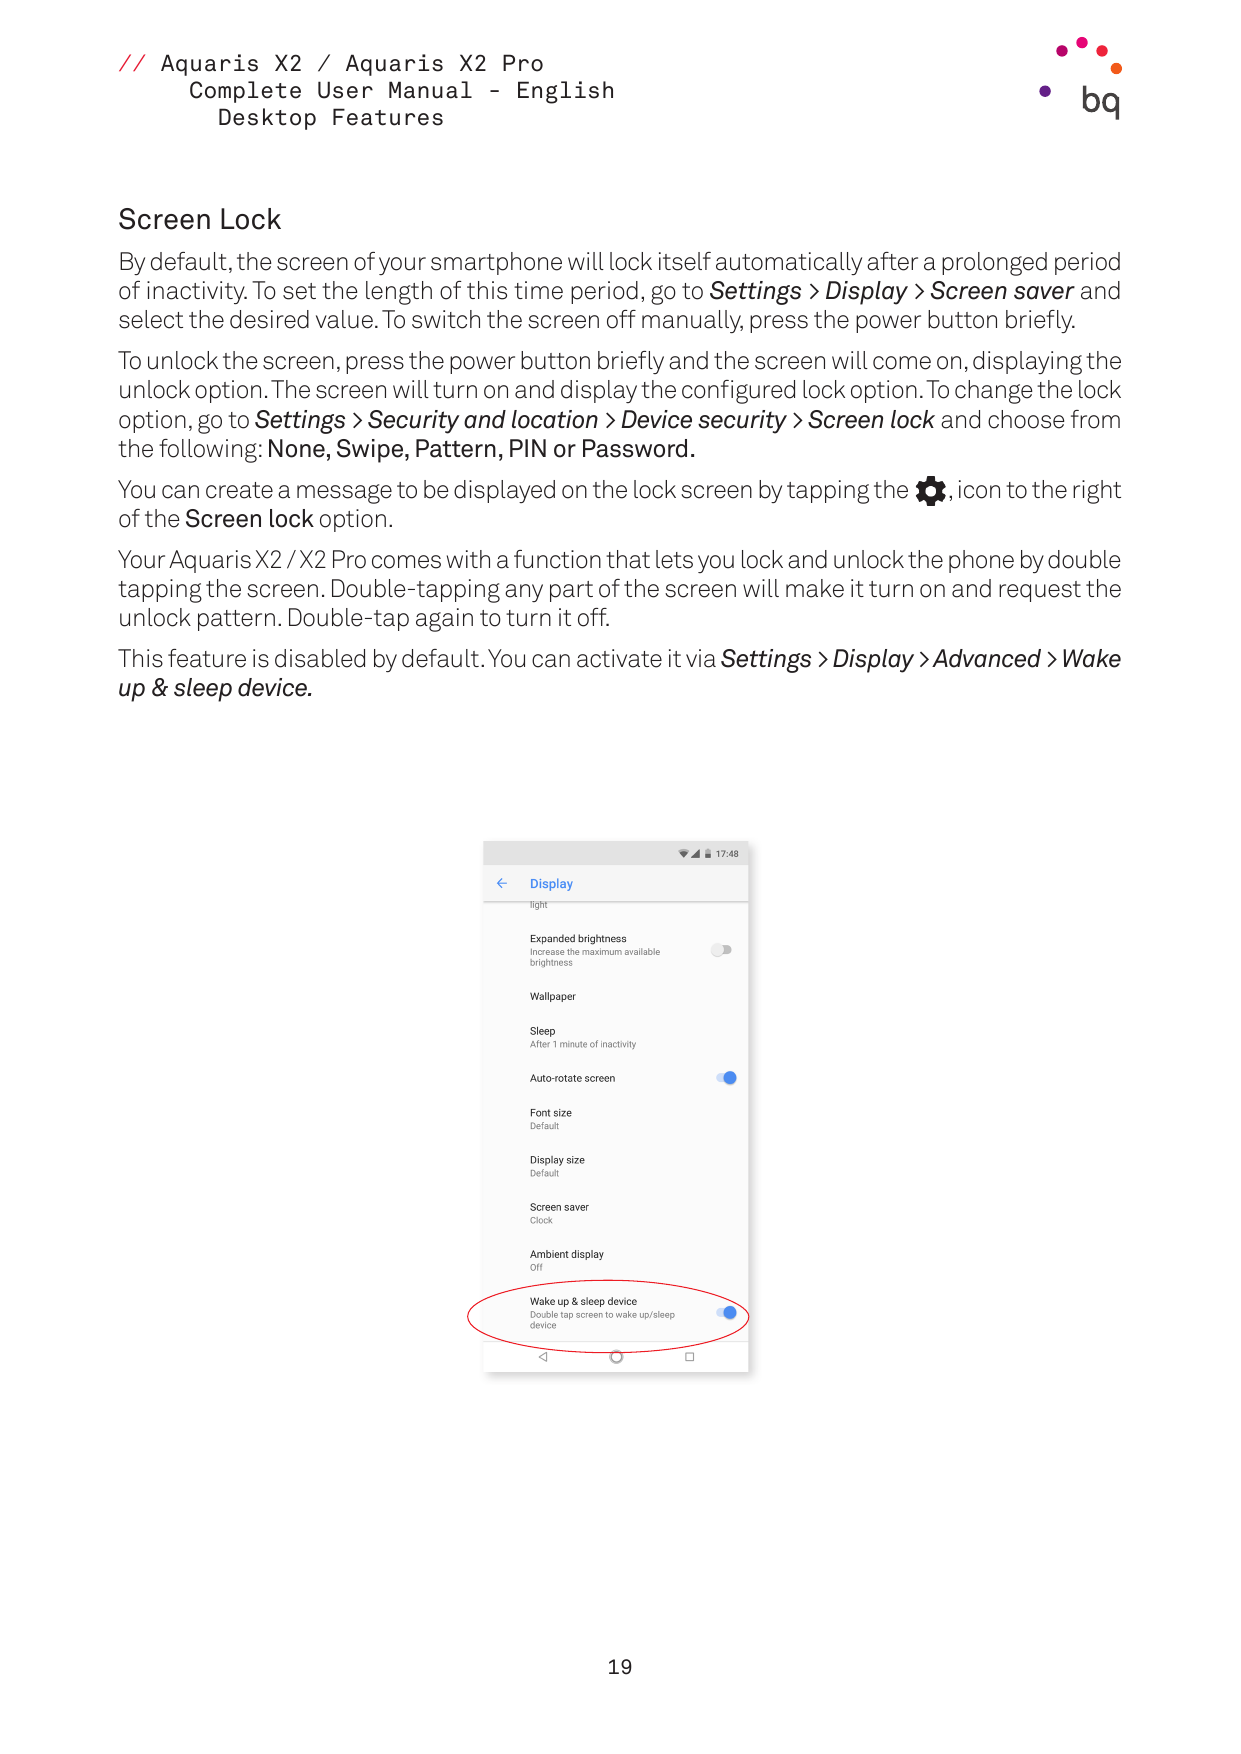 // Aquaris X2 / Aquaris X2 ProComplete User Manual - EnglishDesktop FeaturesScreen LockBy default, the screen of your smartphone